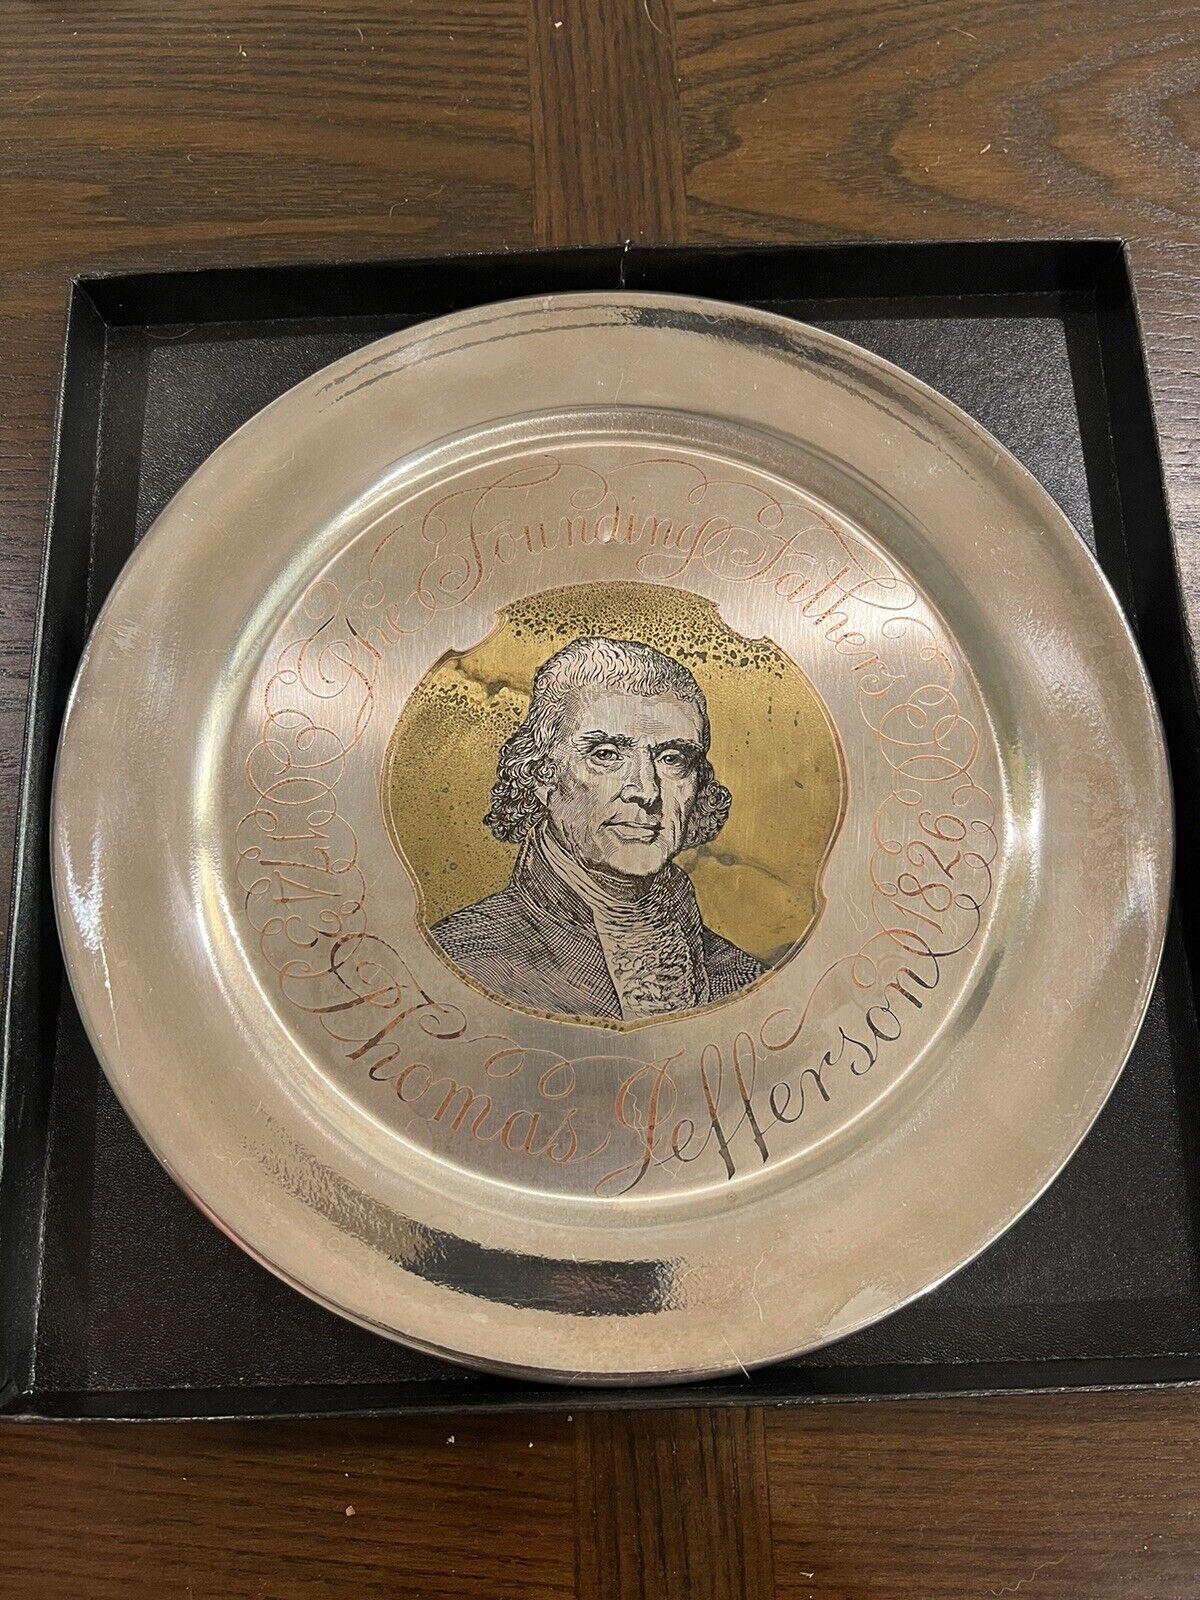 Damascene By Reed & Barton,The Founding Fathers Thomas Jefferson Plate #139/2500